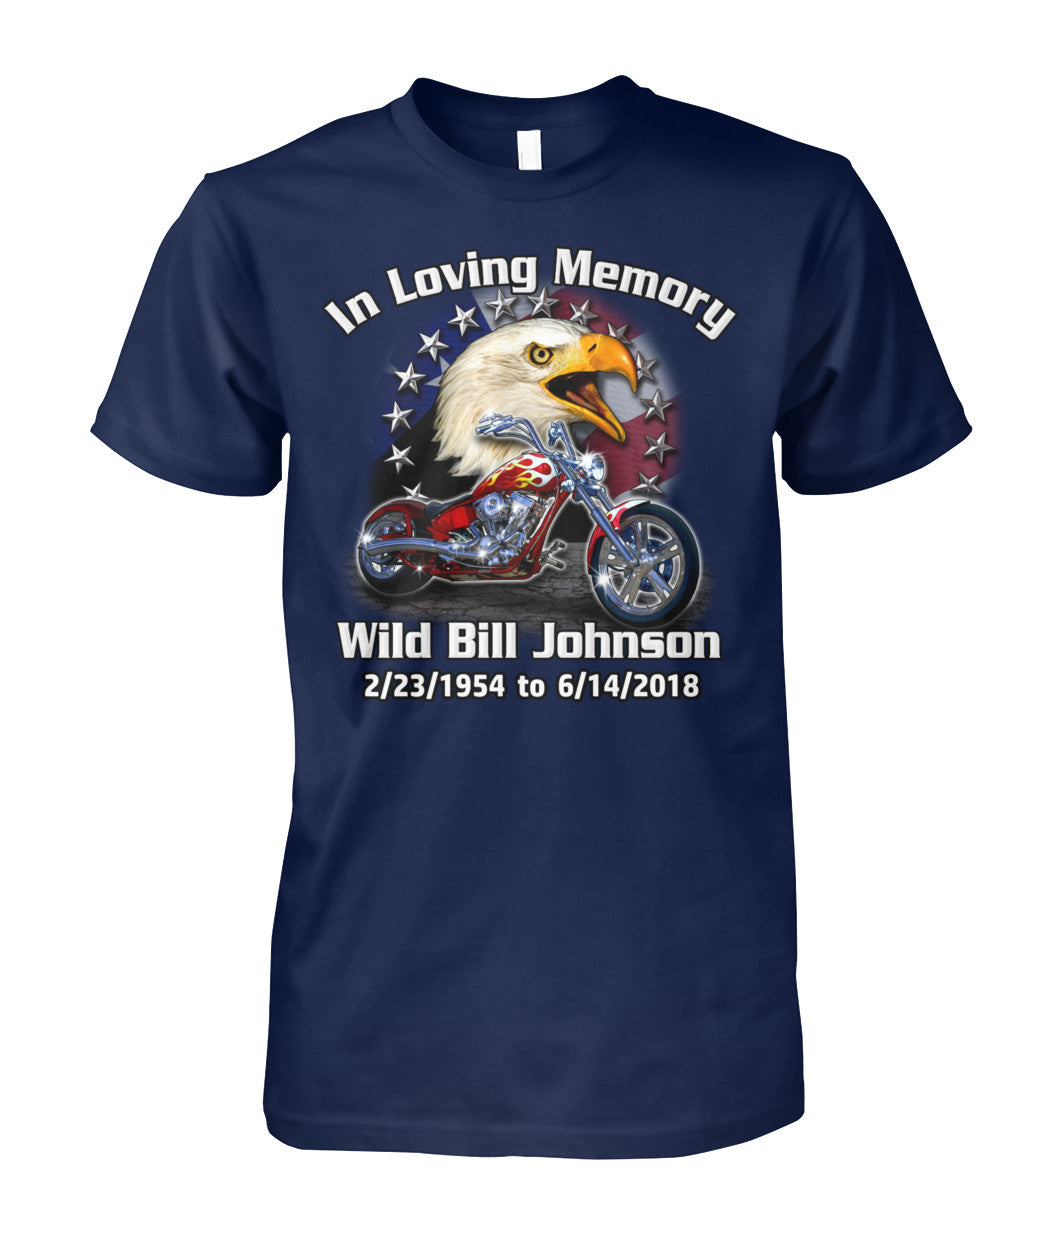 In Loving Memory Custom Motorcycle shirt